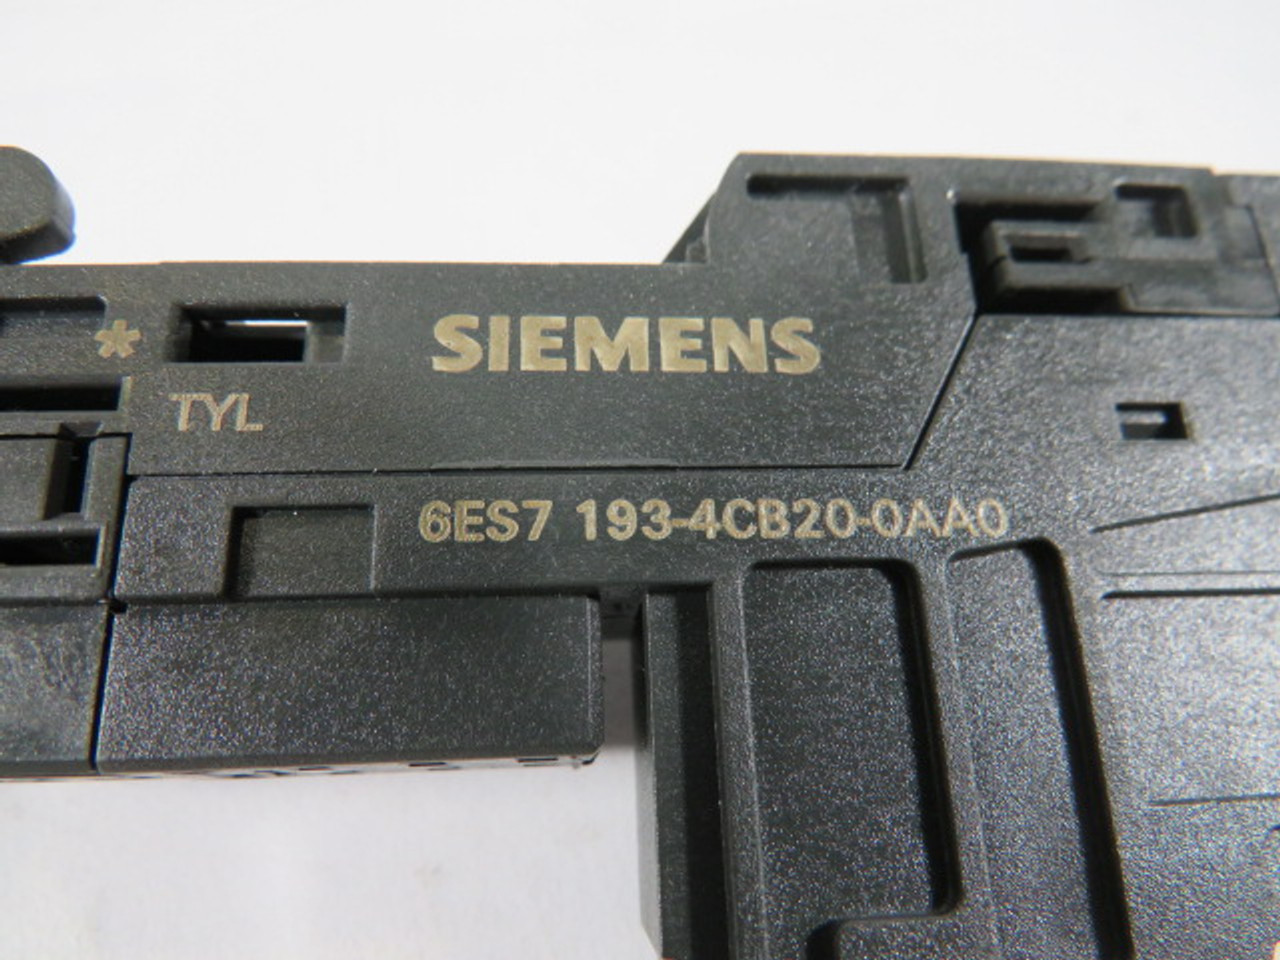 Siemens 6ES7-193-4CB20-0AA0 Terminal Module Ser TYL USED